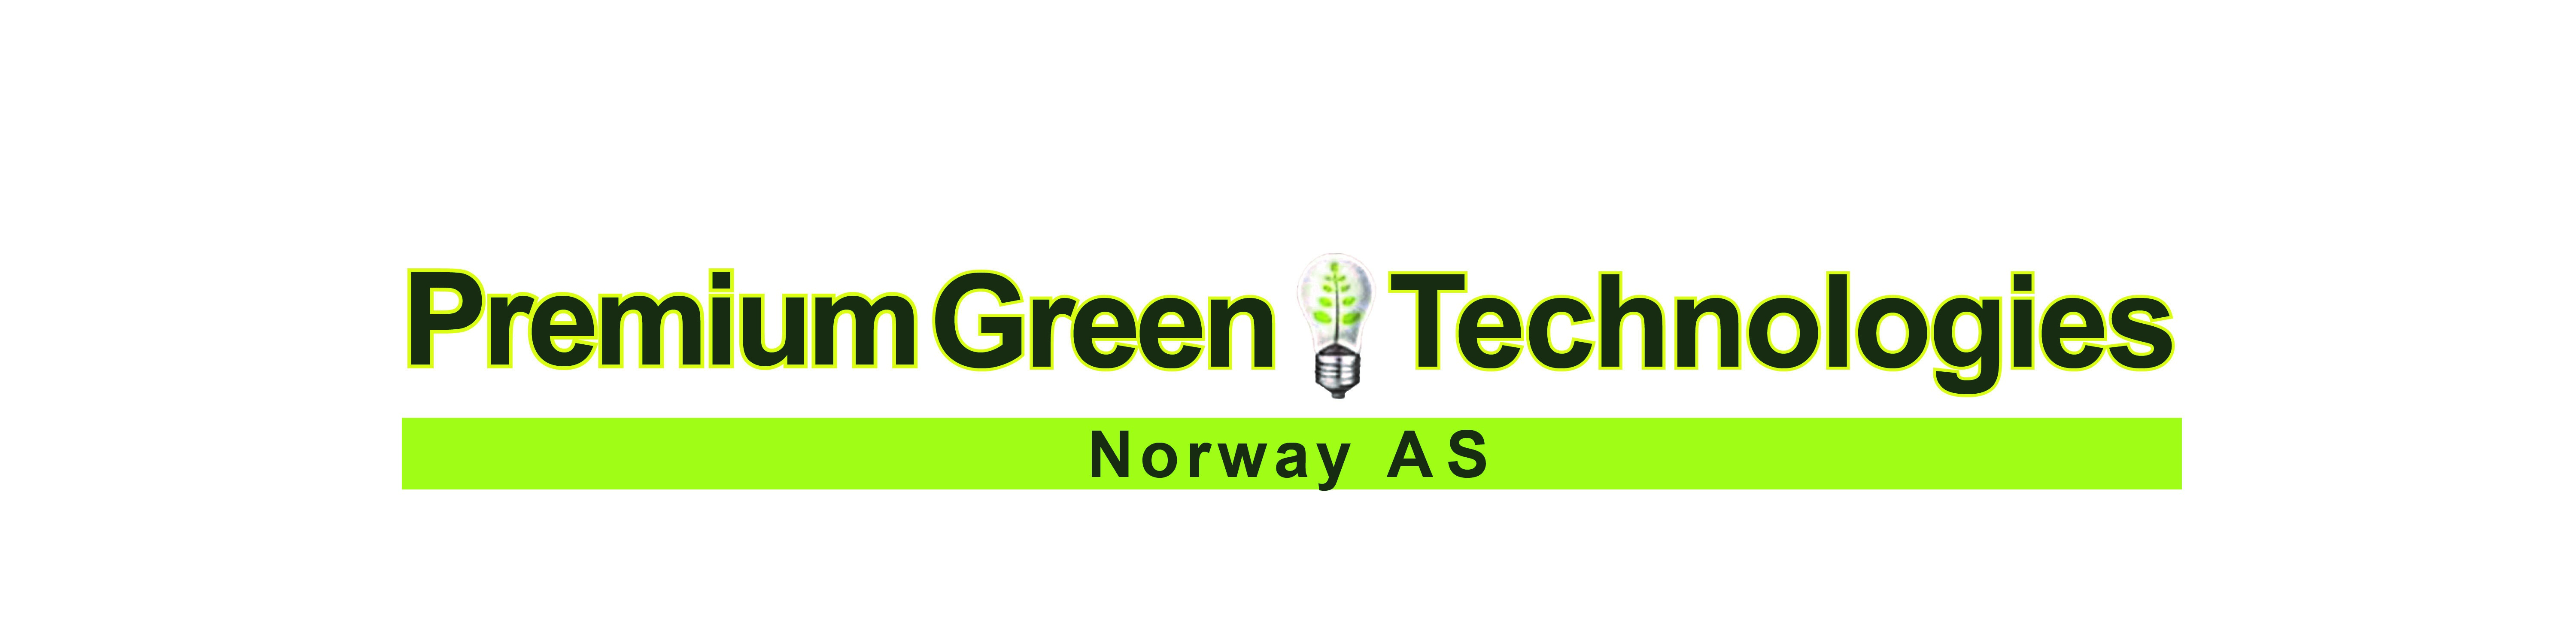 Premium Green Technologies Norway AS